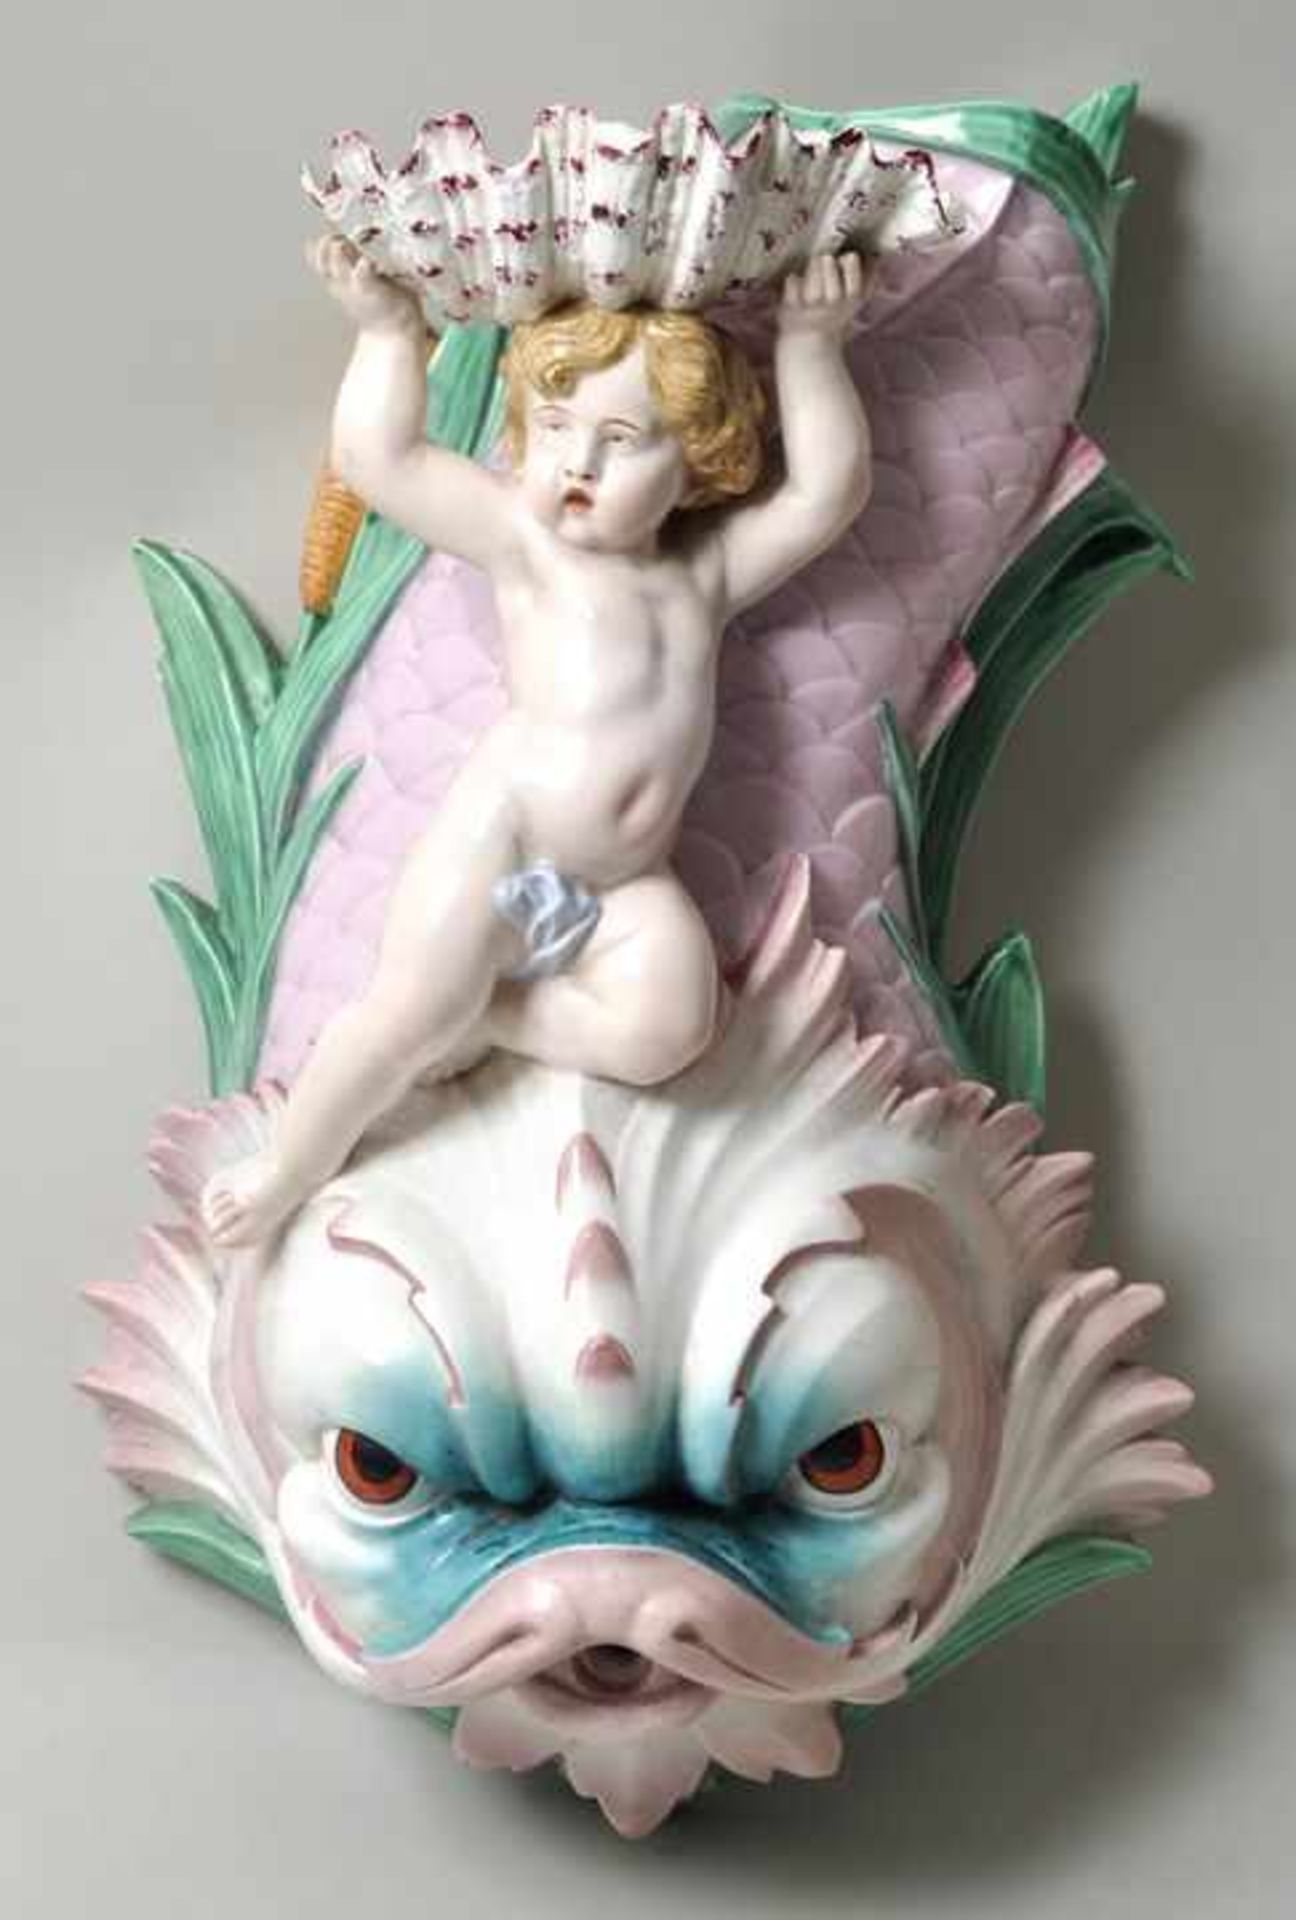 Wandbrunnen, Bordeaux, Vieillard & Cie, Ende 19. Jh.Keramik/ Fayence, polychrome Glasuren/ - Bild 2 aus 3